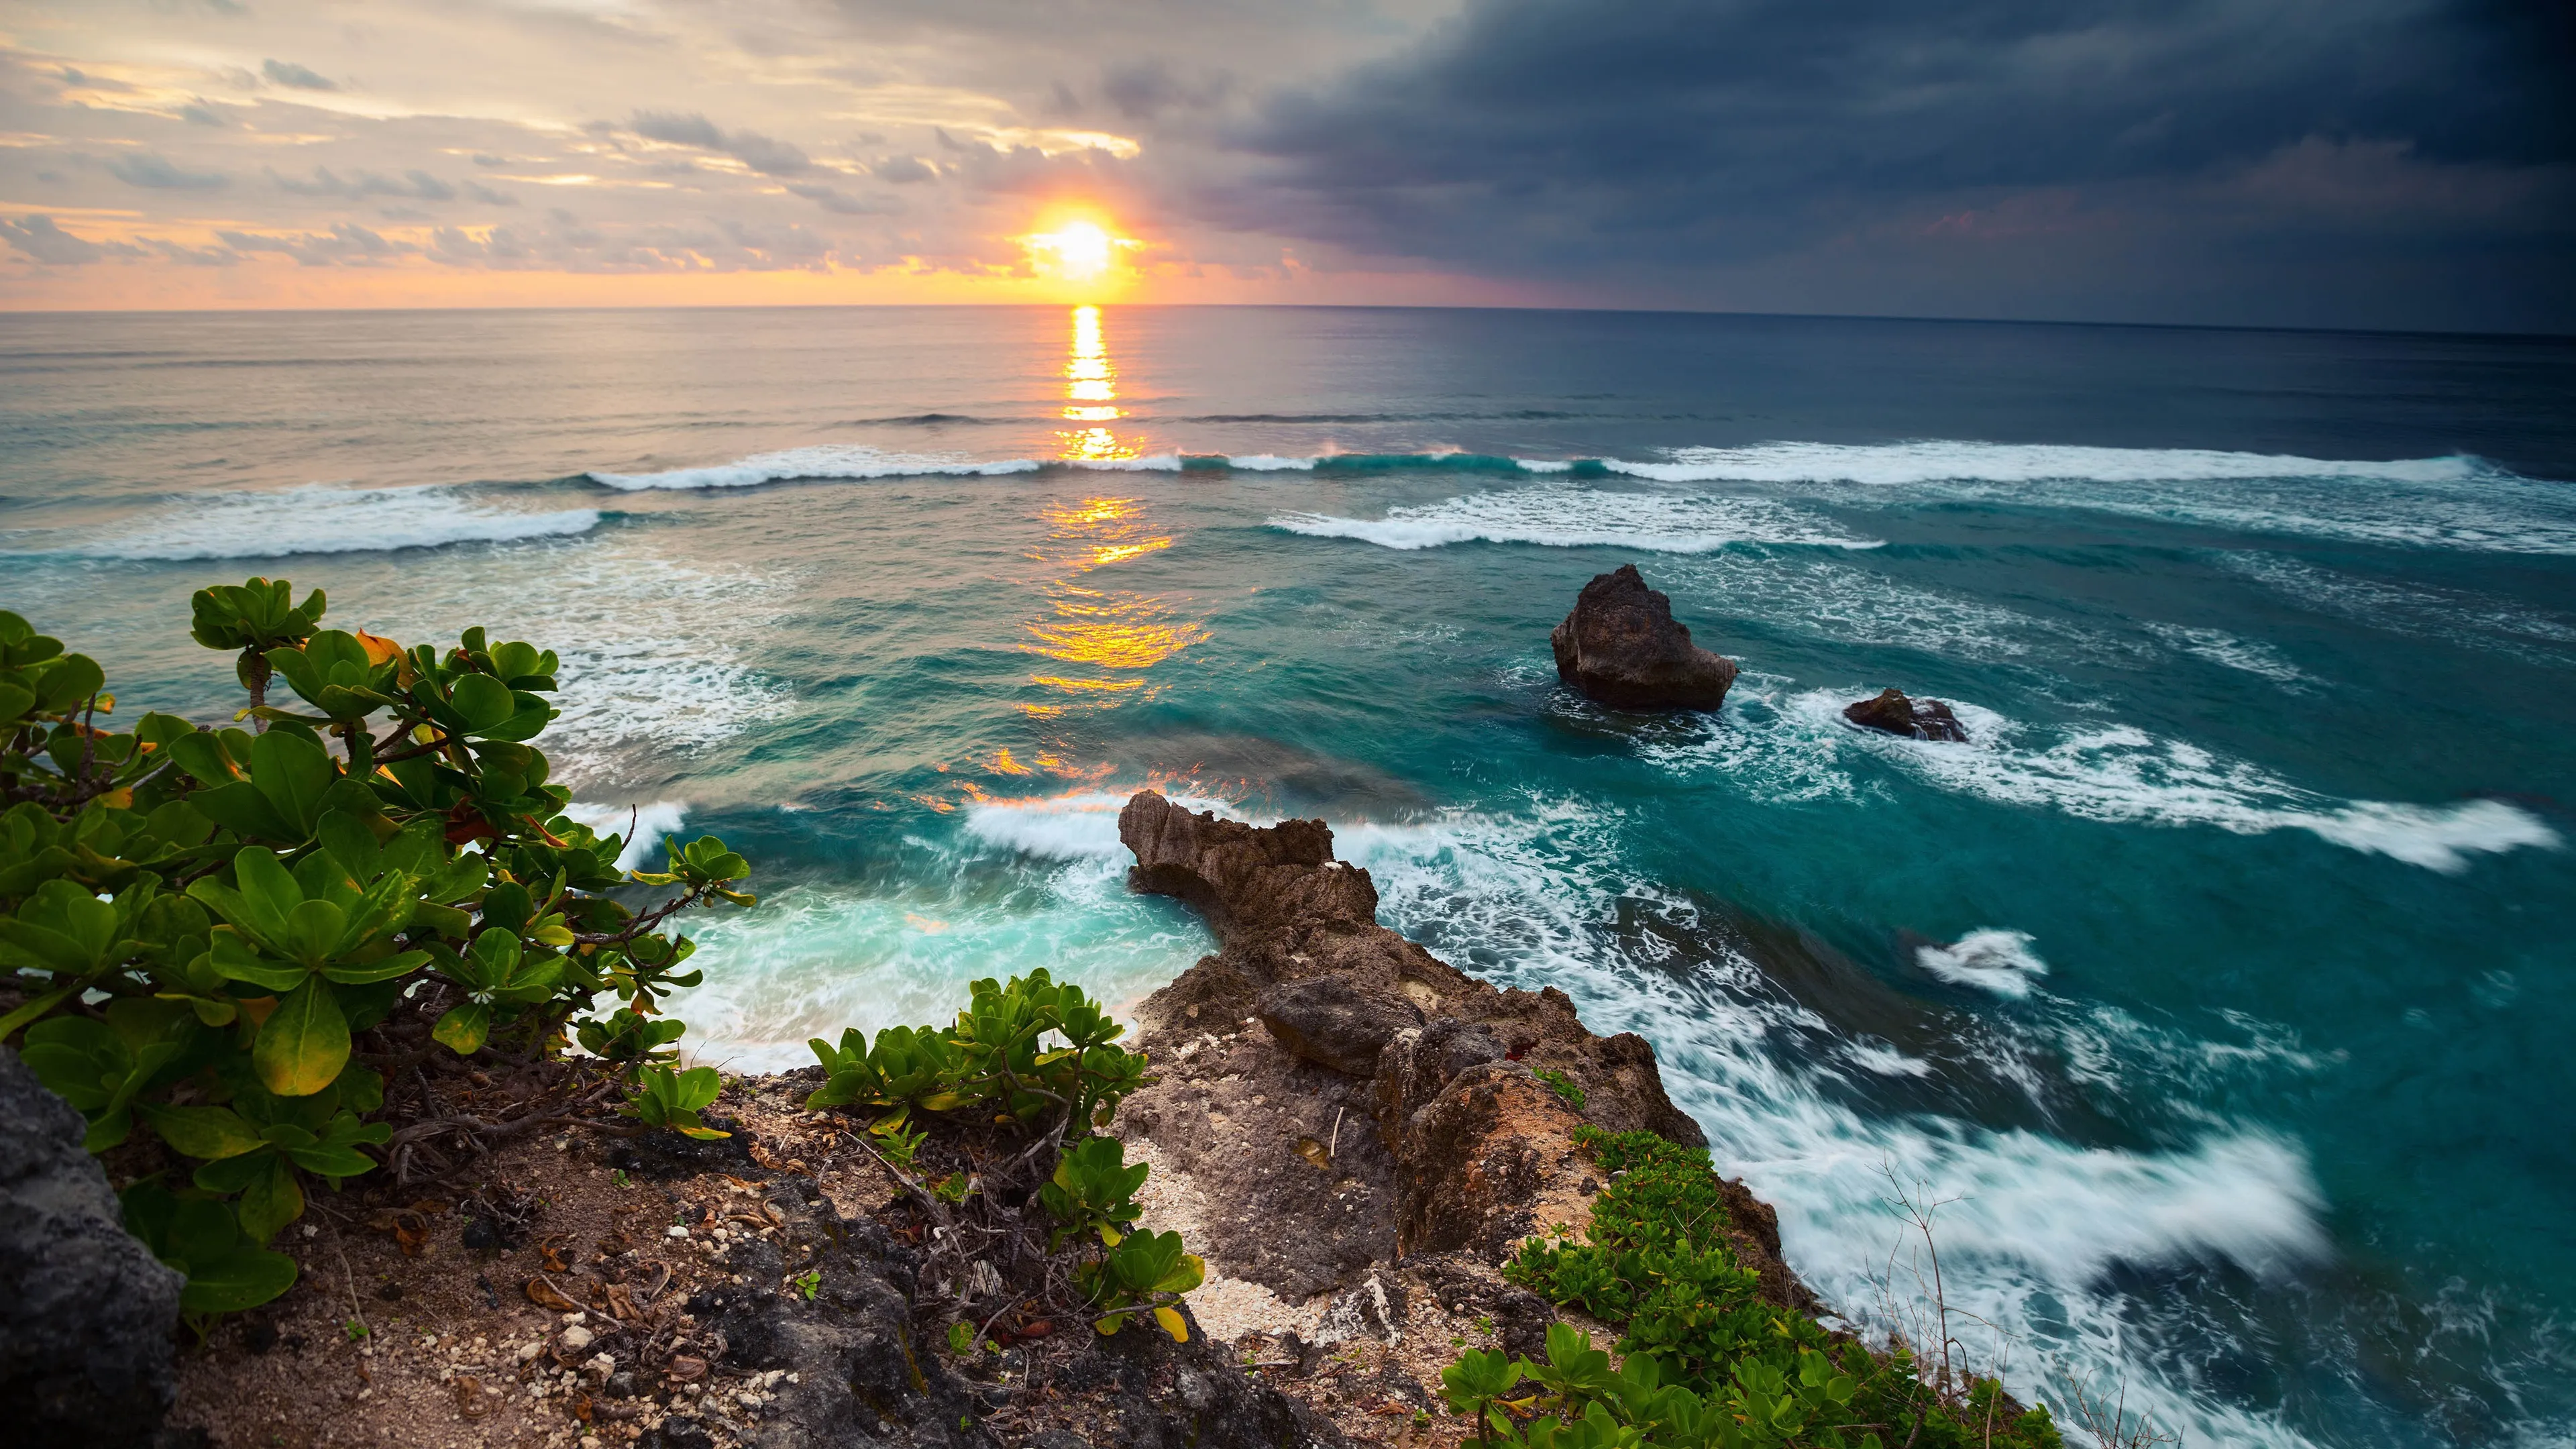 indonesia bali island tropical nature scenery sea waves sunset 4k wallpaper